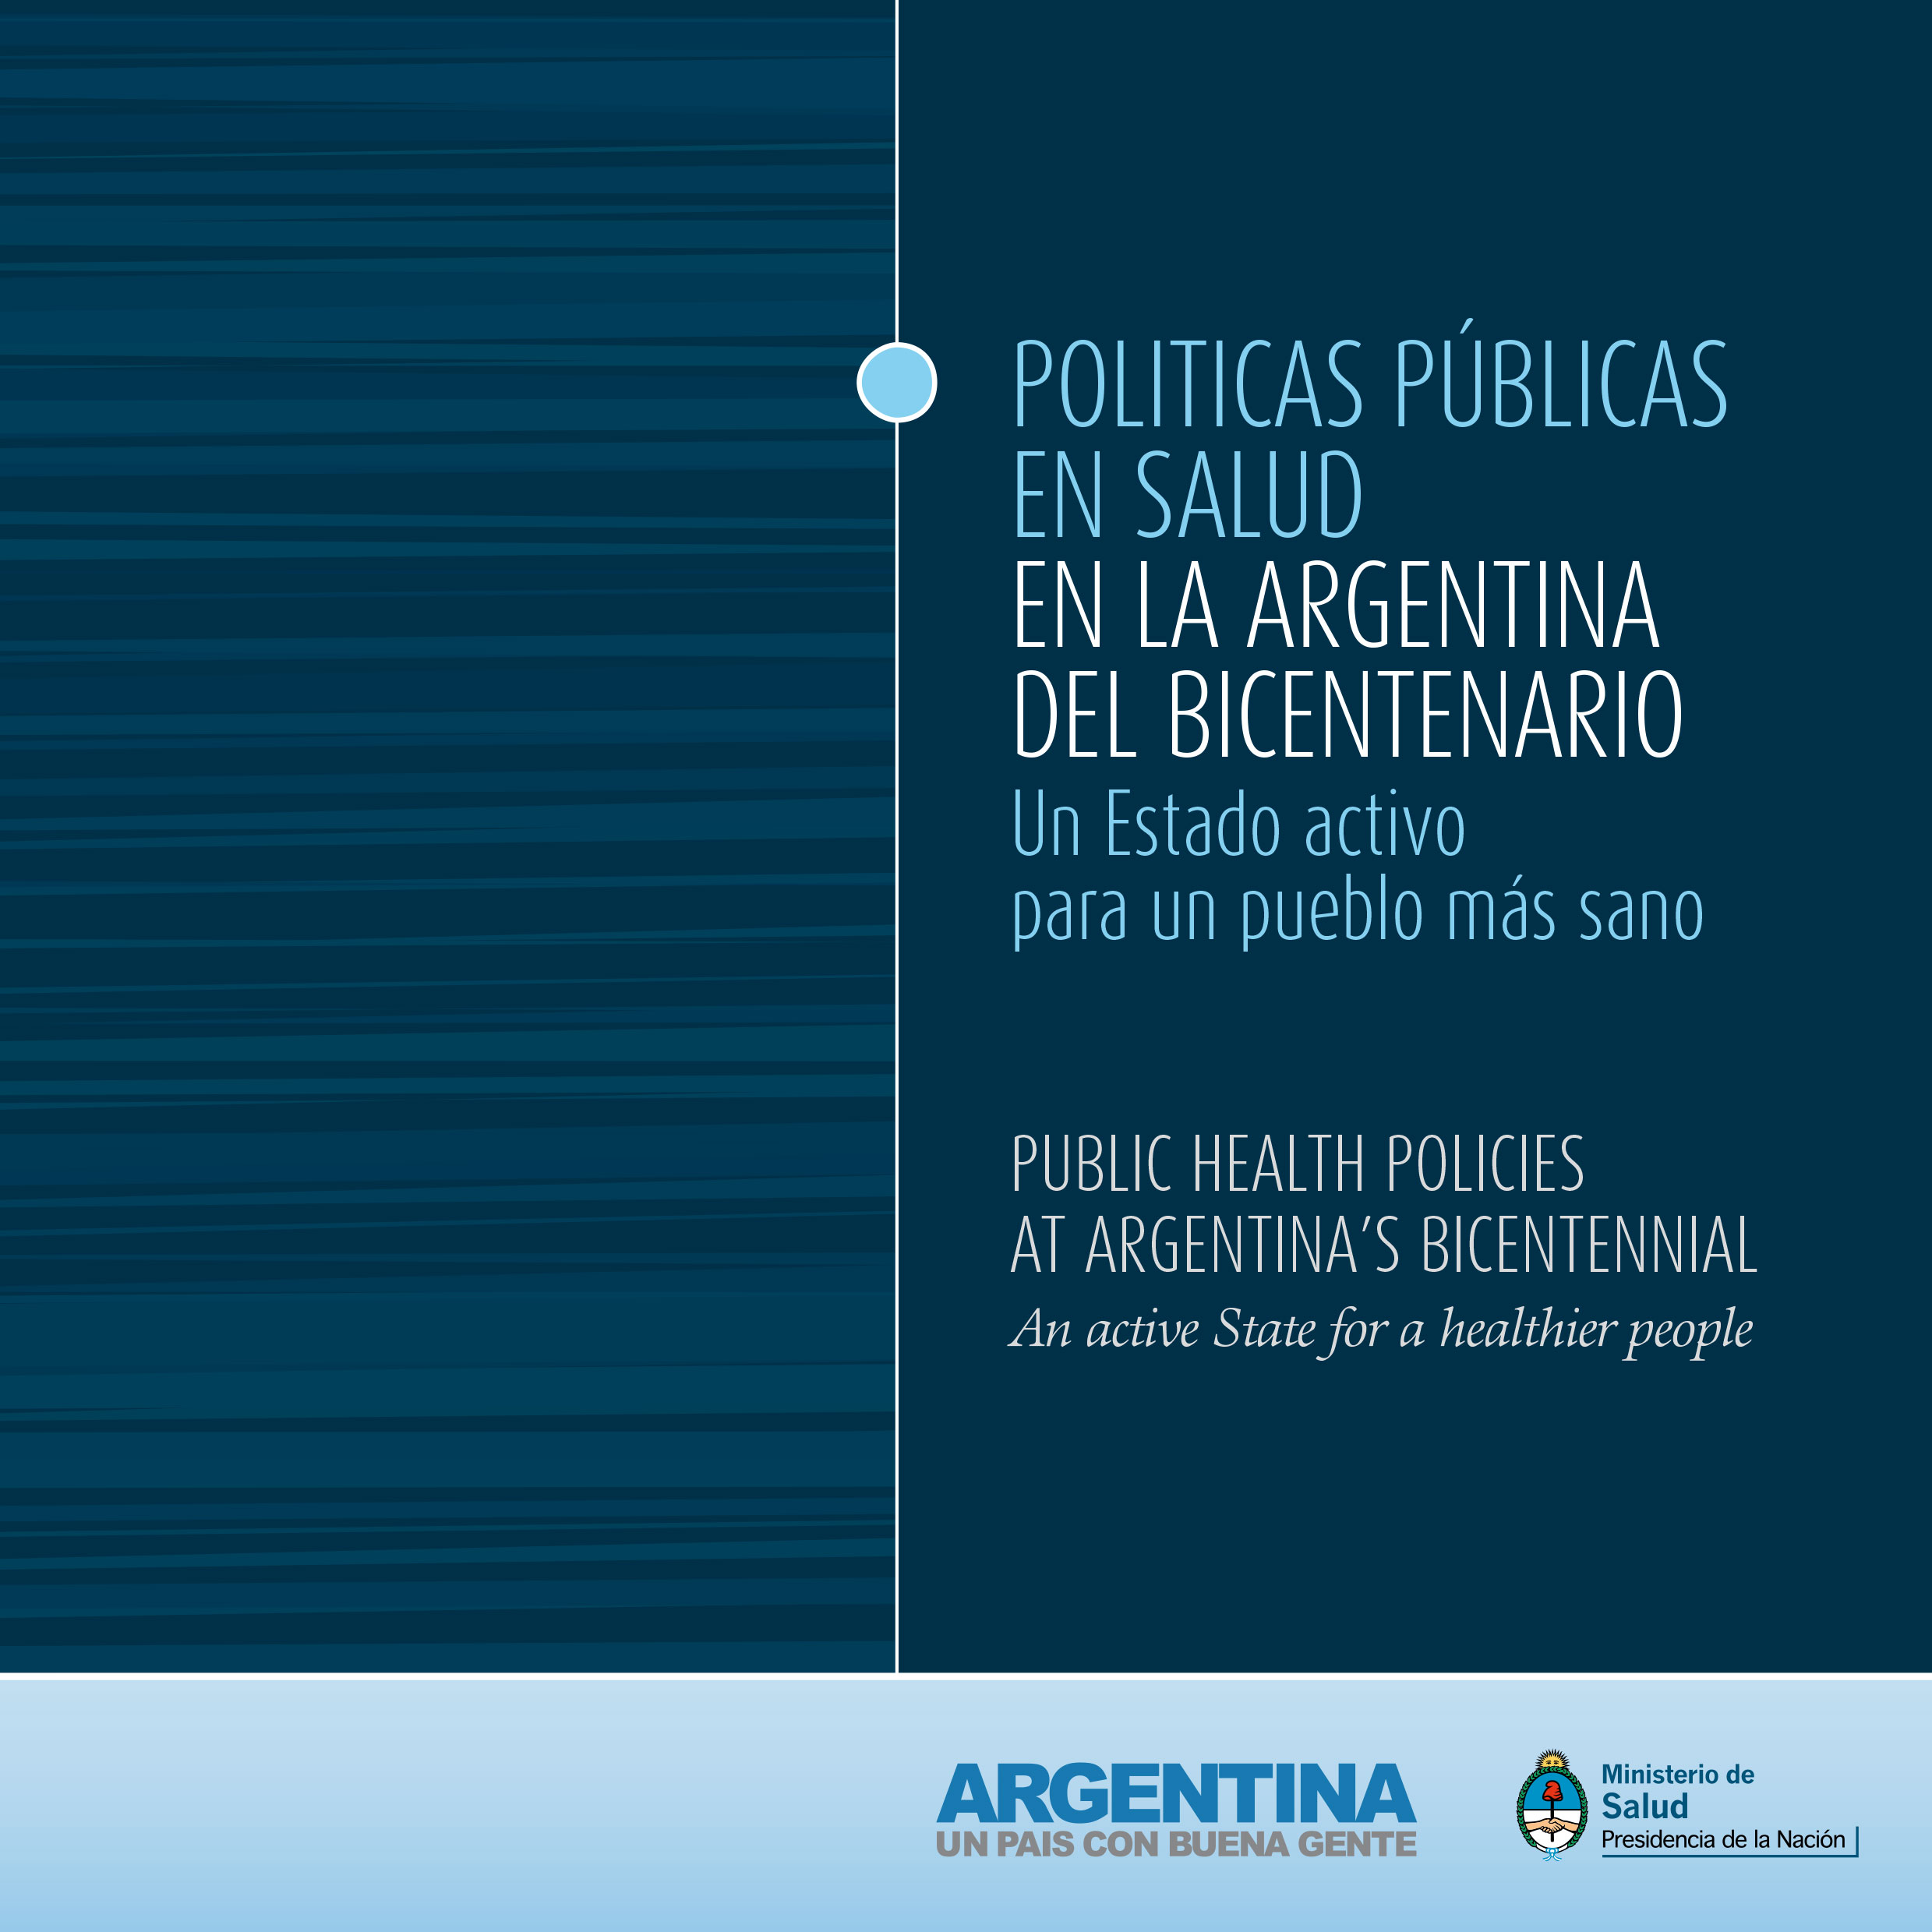 Public Health Policies in Argentina